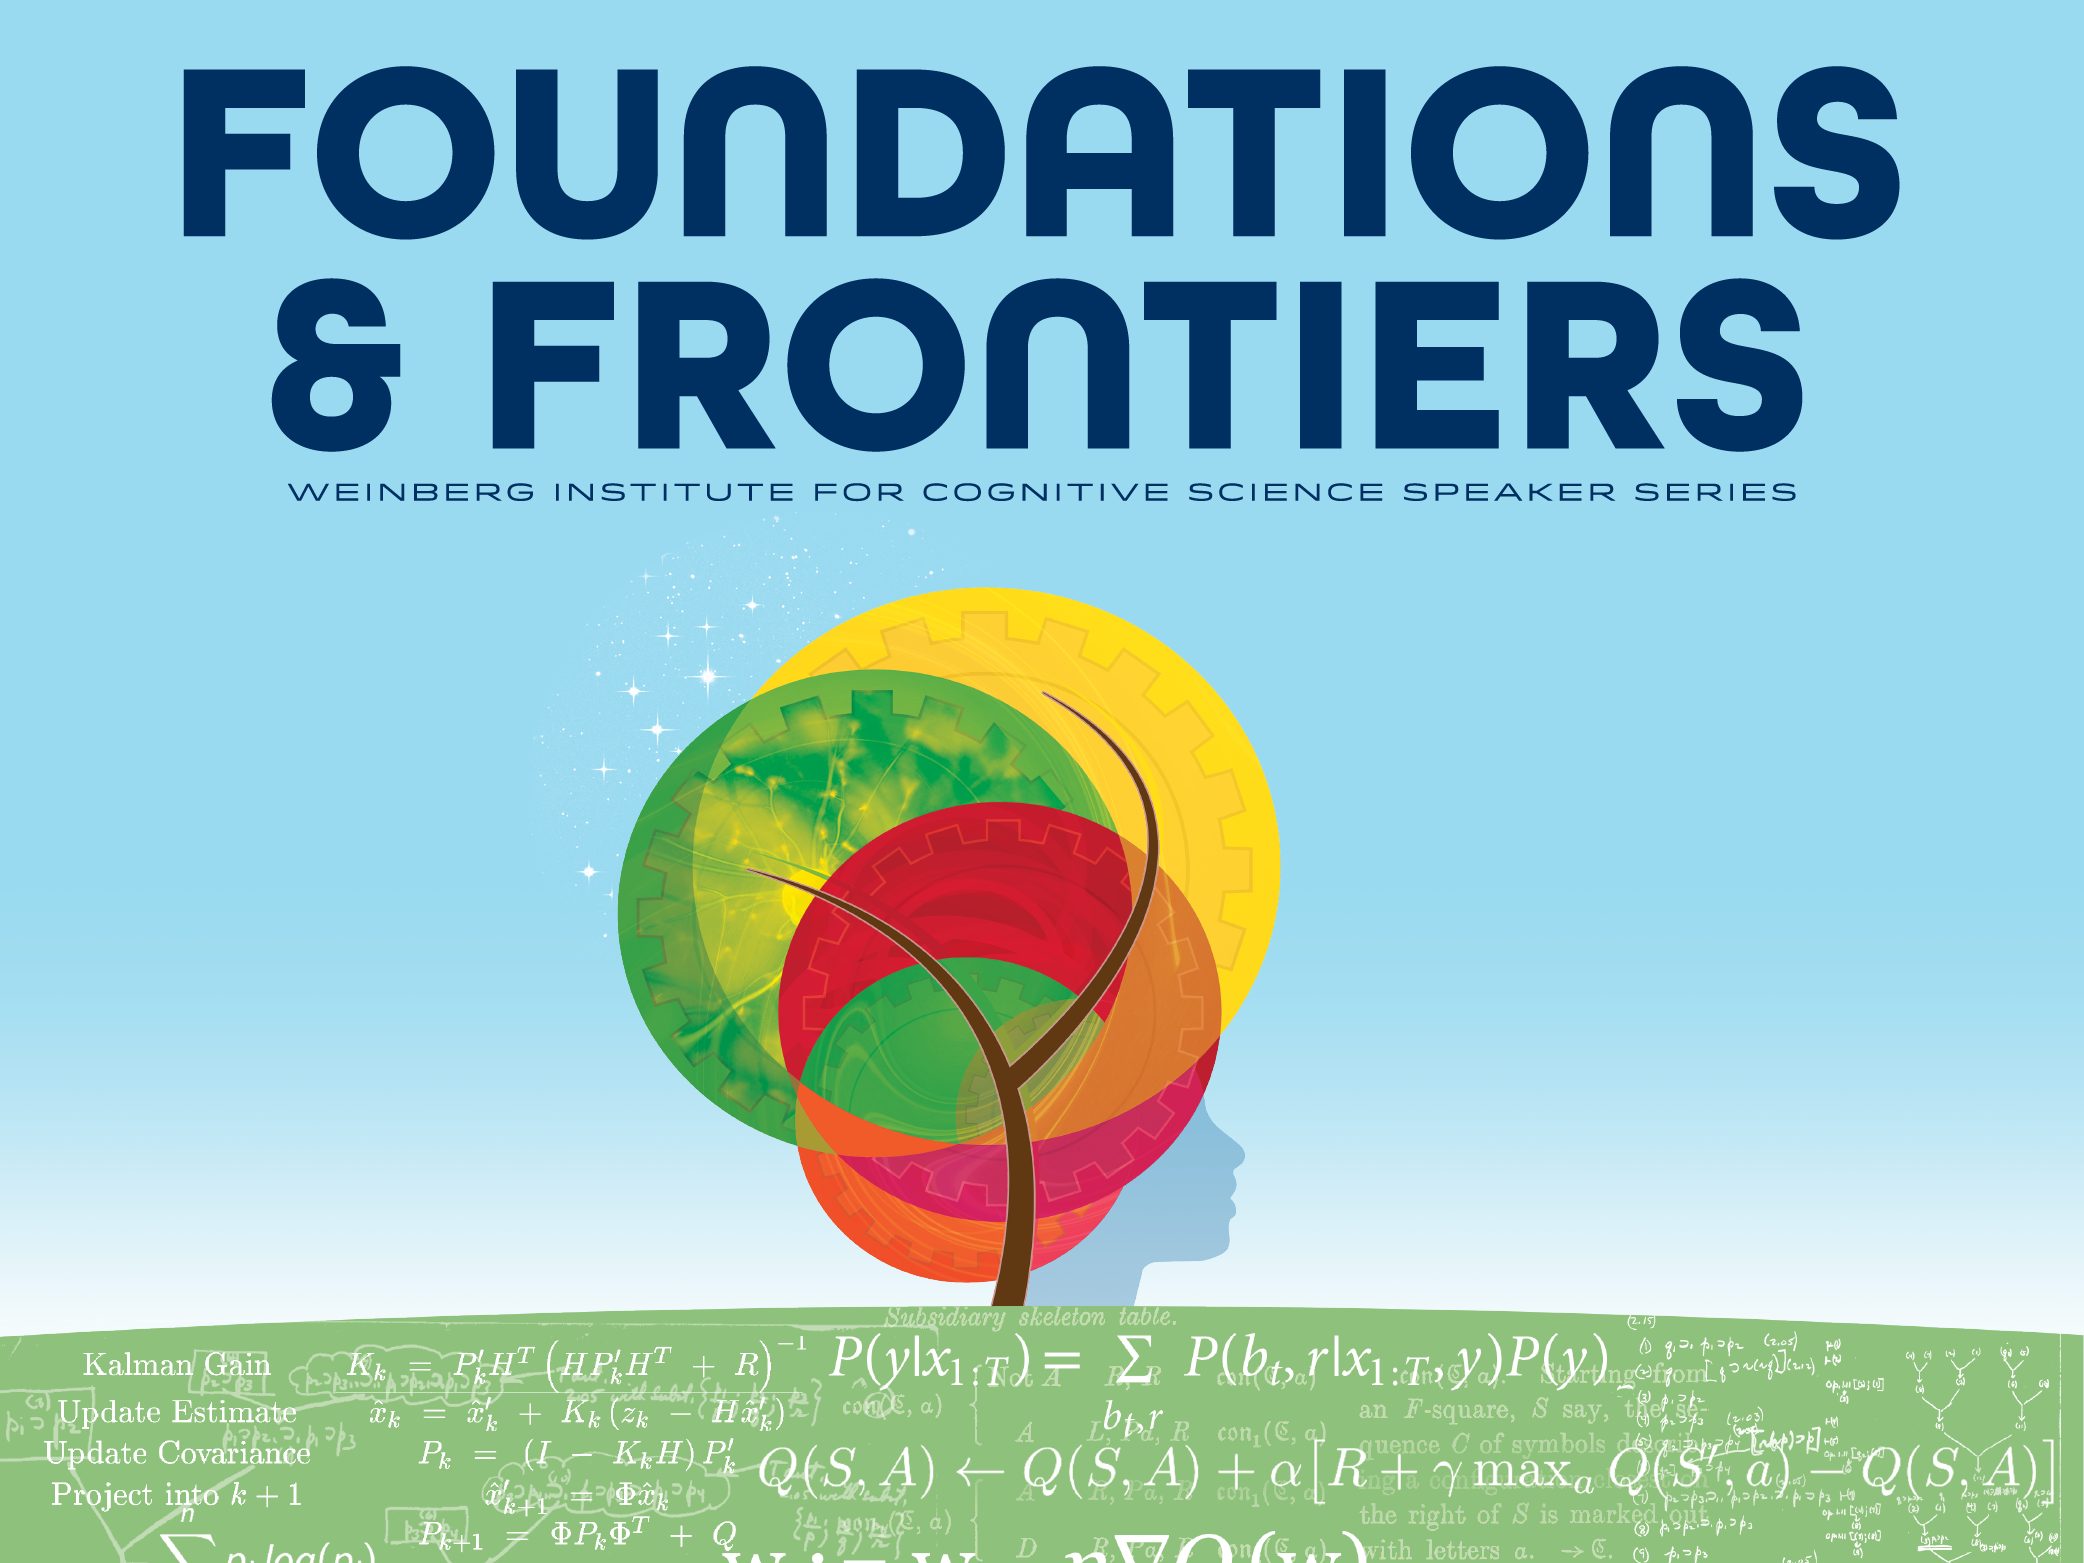 Foundations & Frontiers Speaker Series